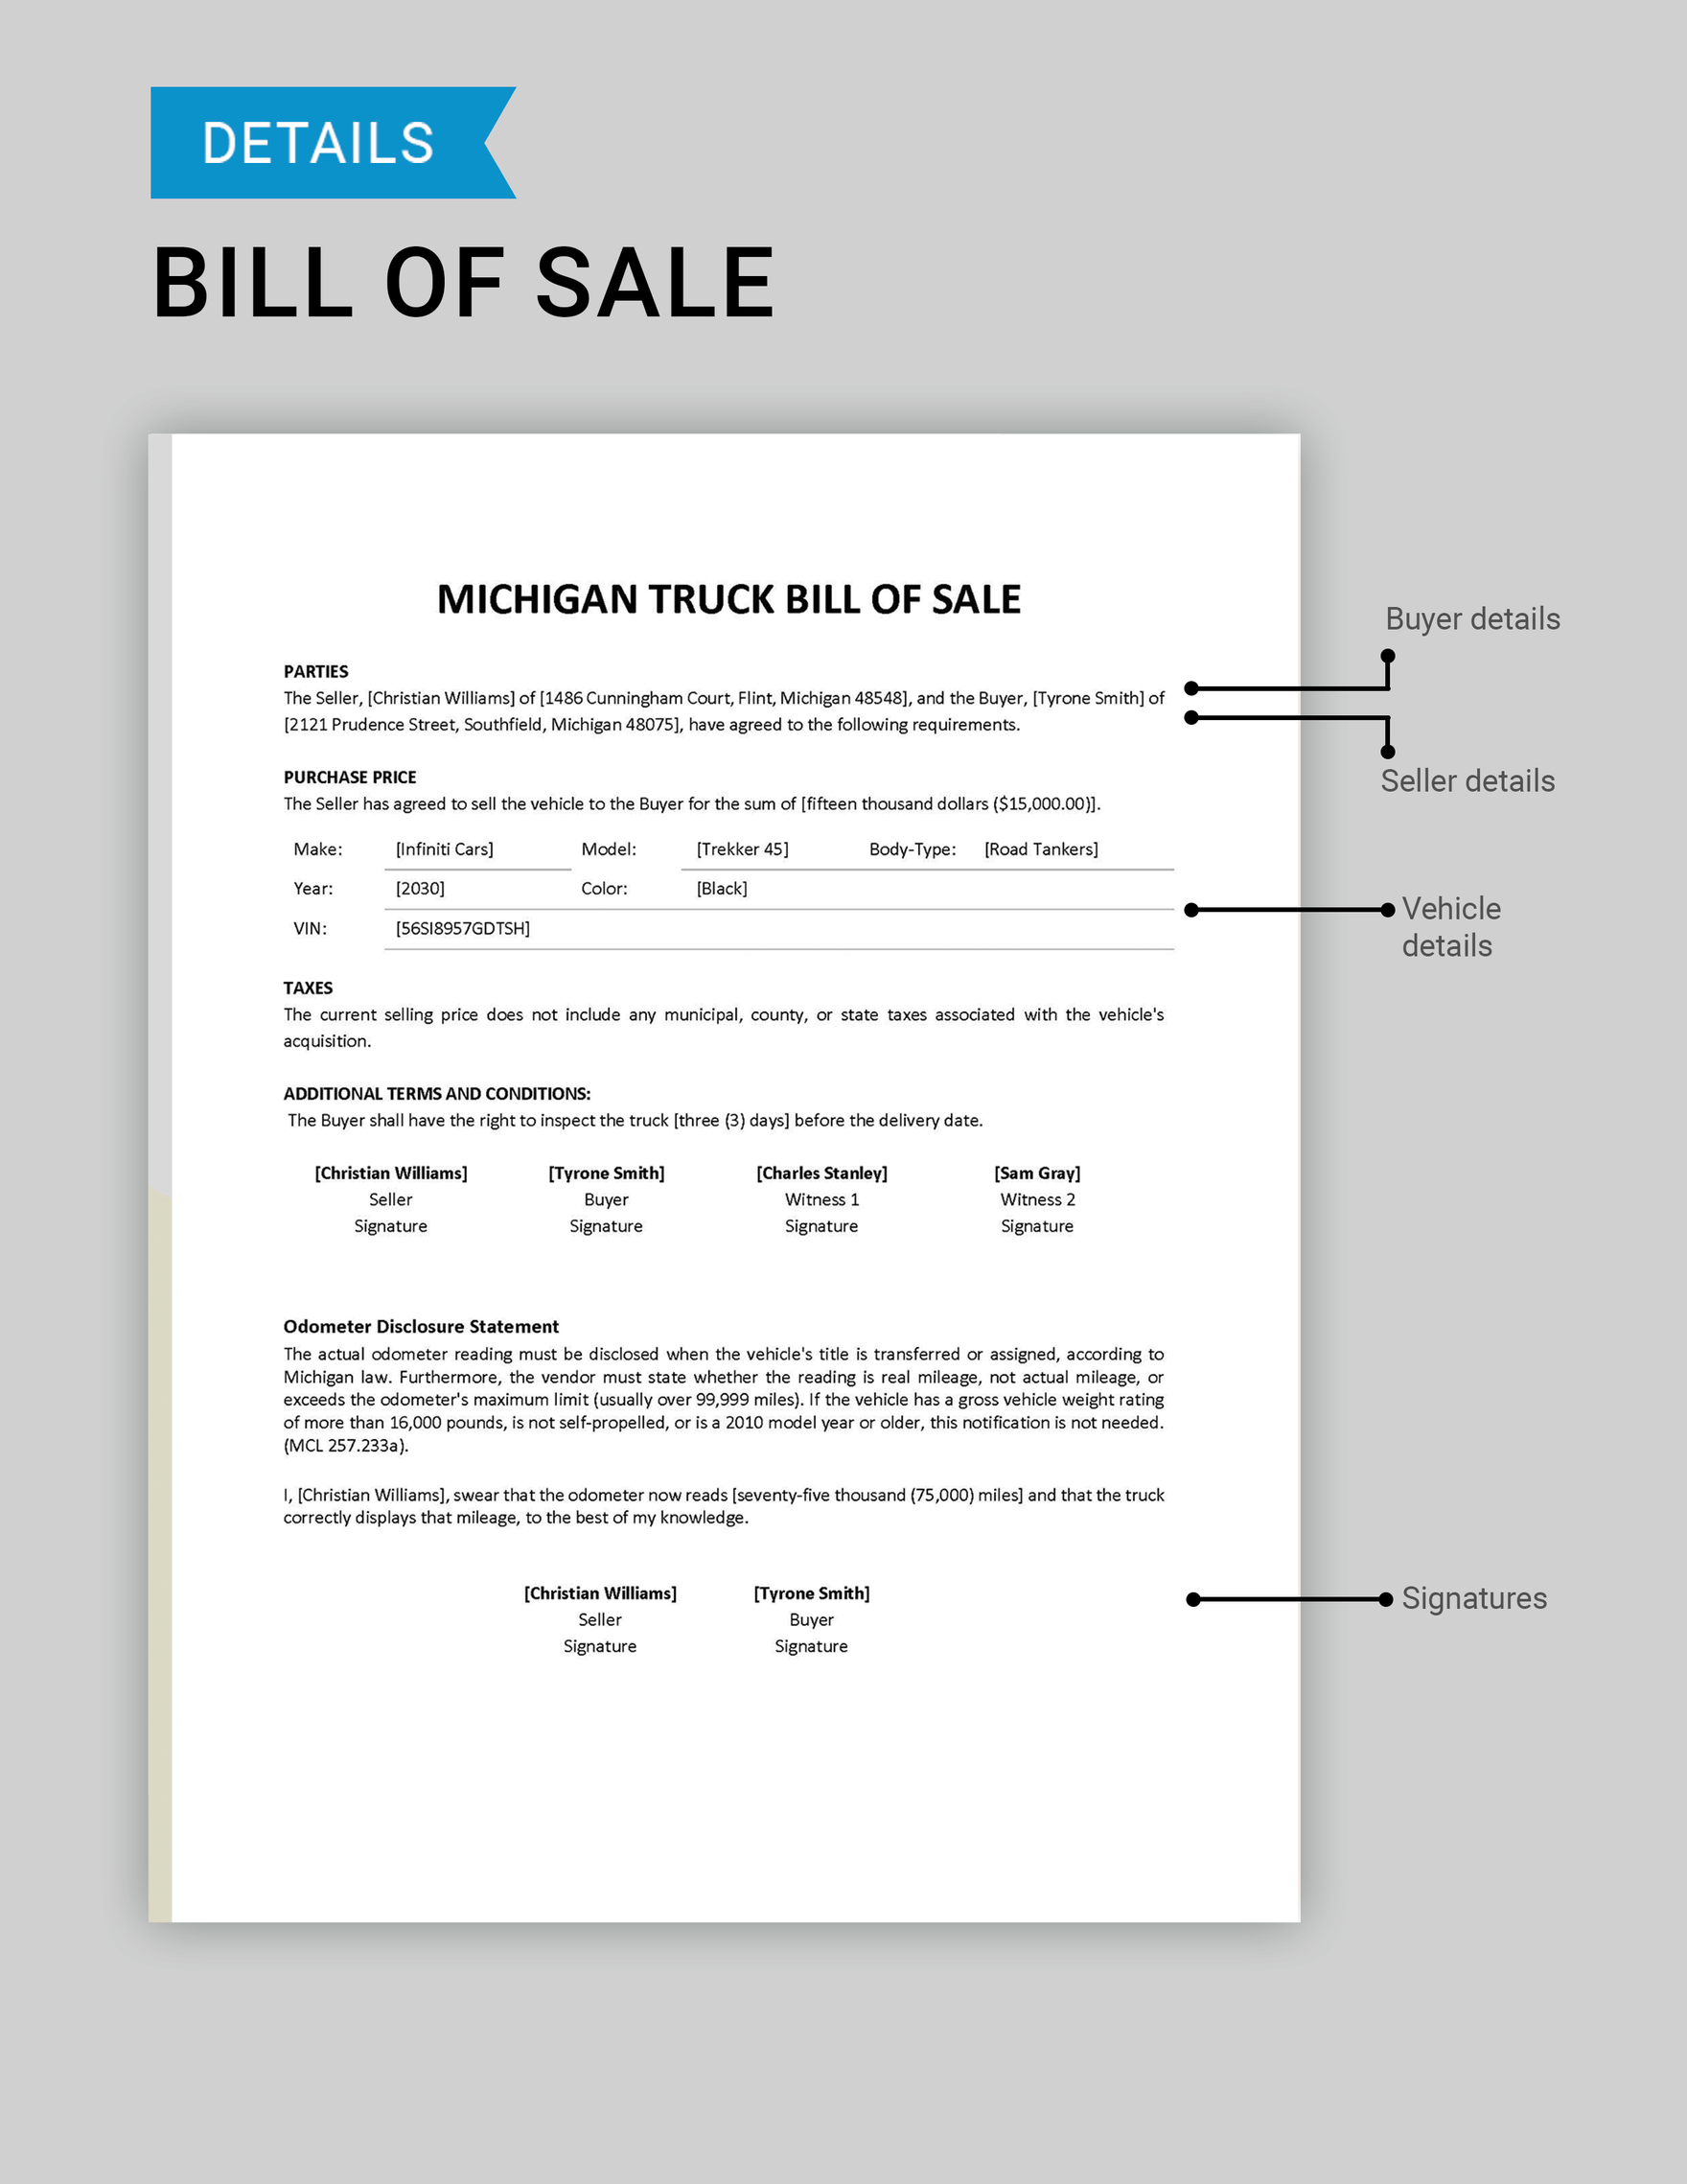 Michigan Truck Bill of Sale Template